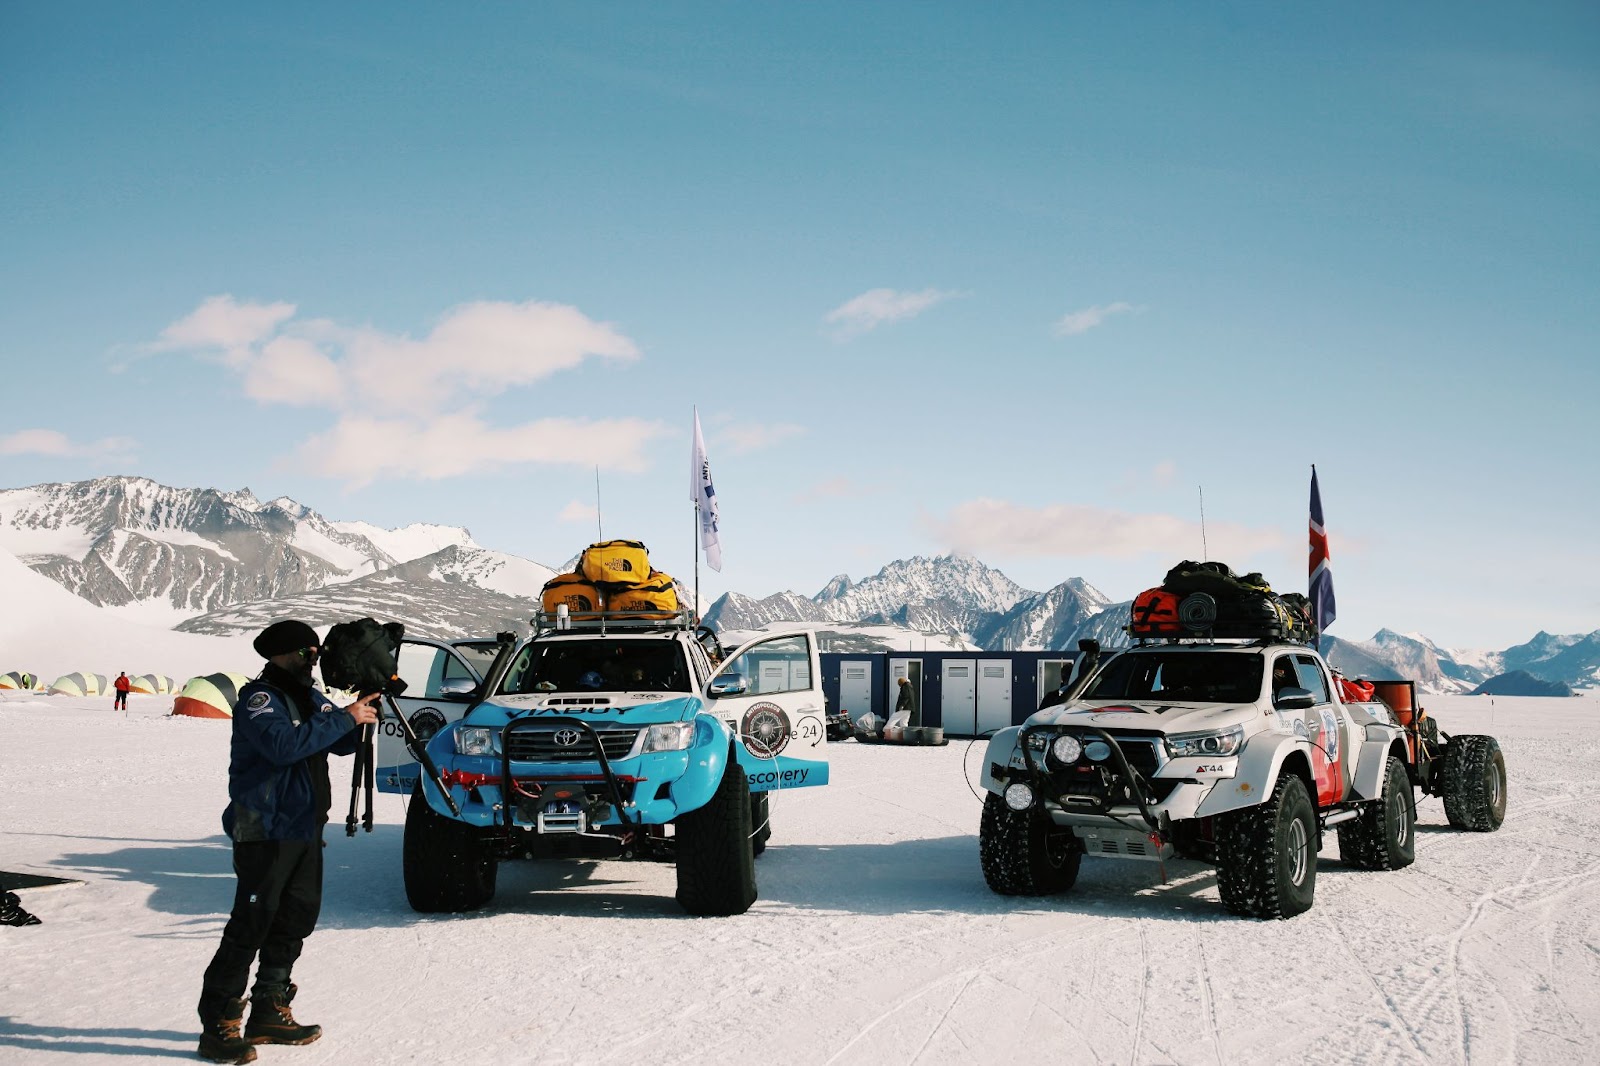 Автомобили Arctic Trucks экспедиции проекта “Антропогеос” в лагере Юнион, Антарктида.